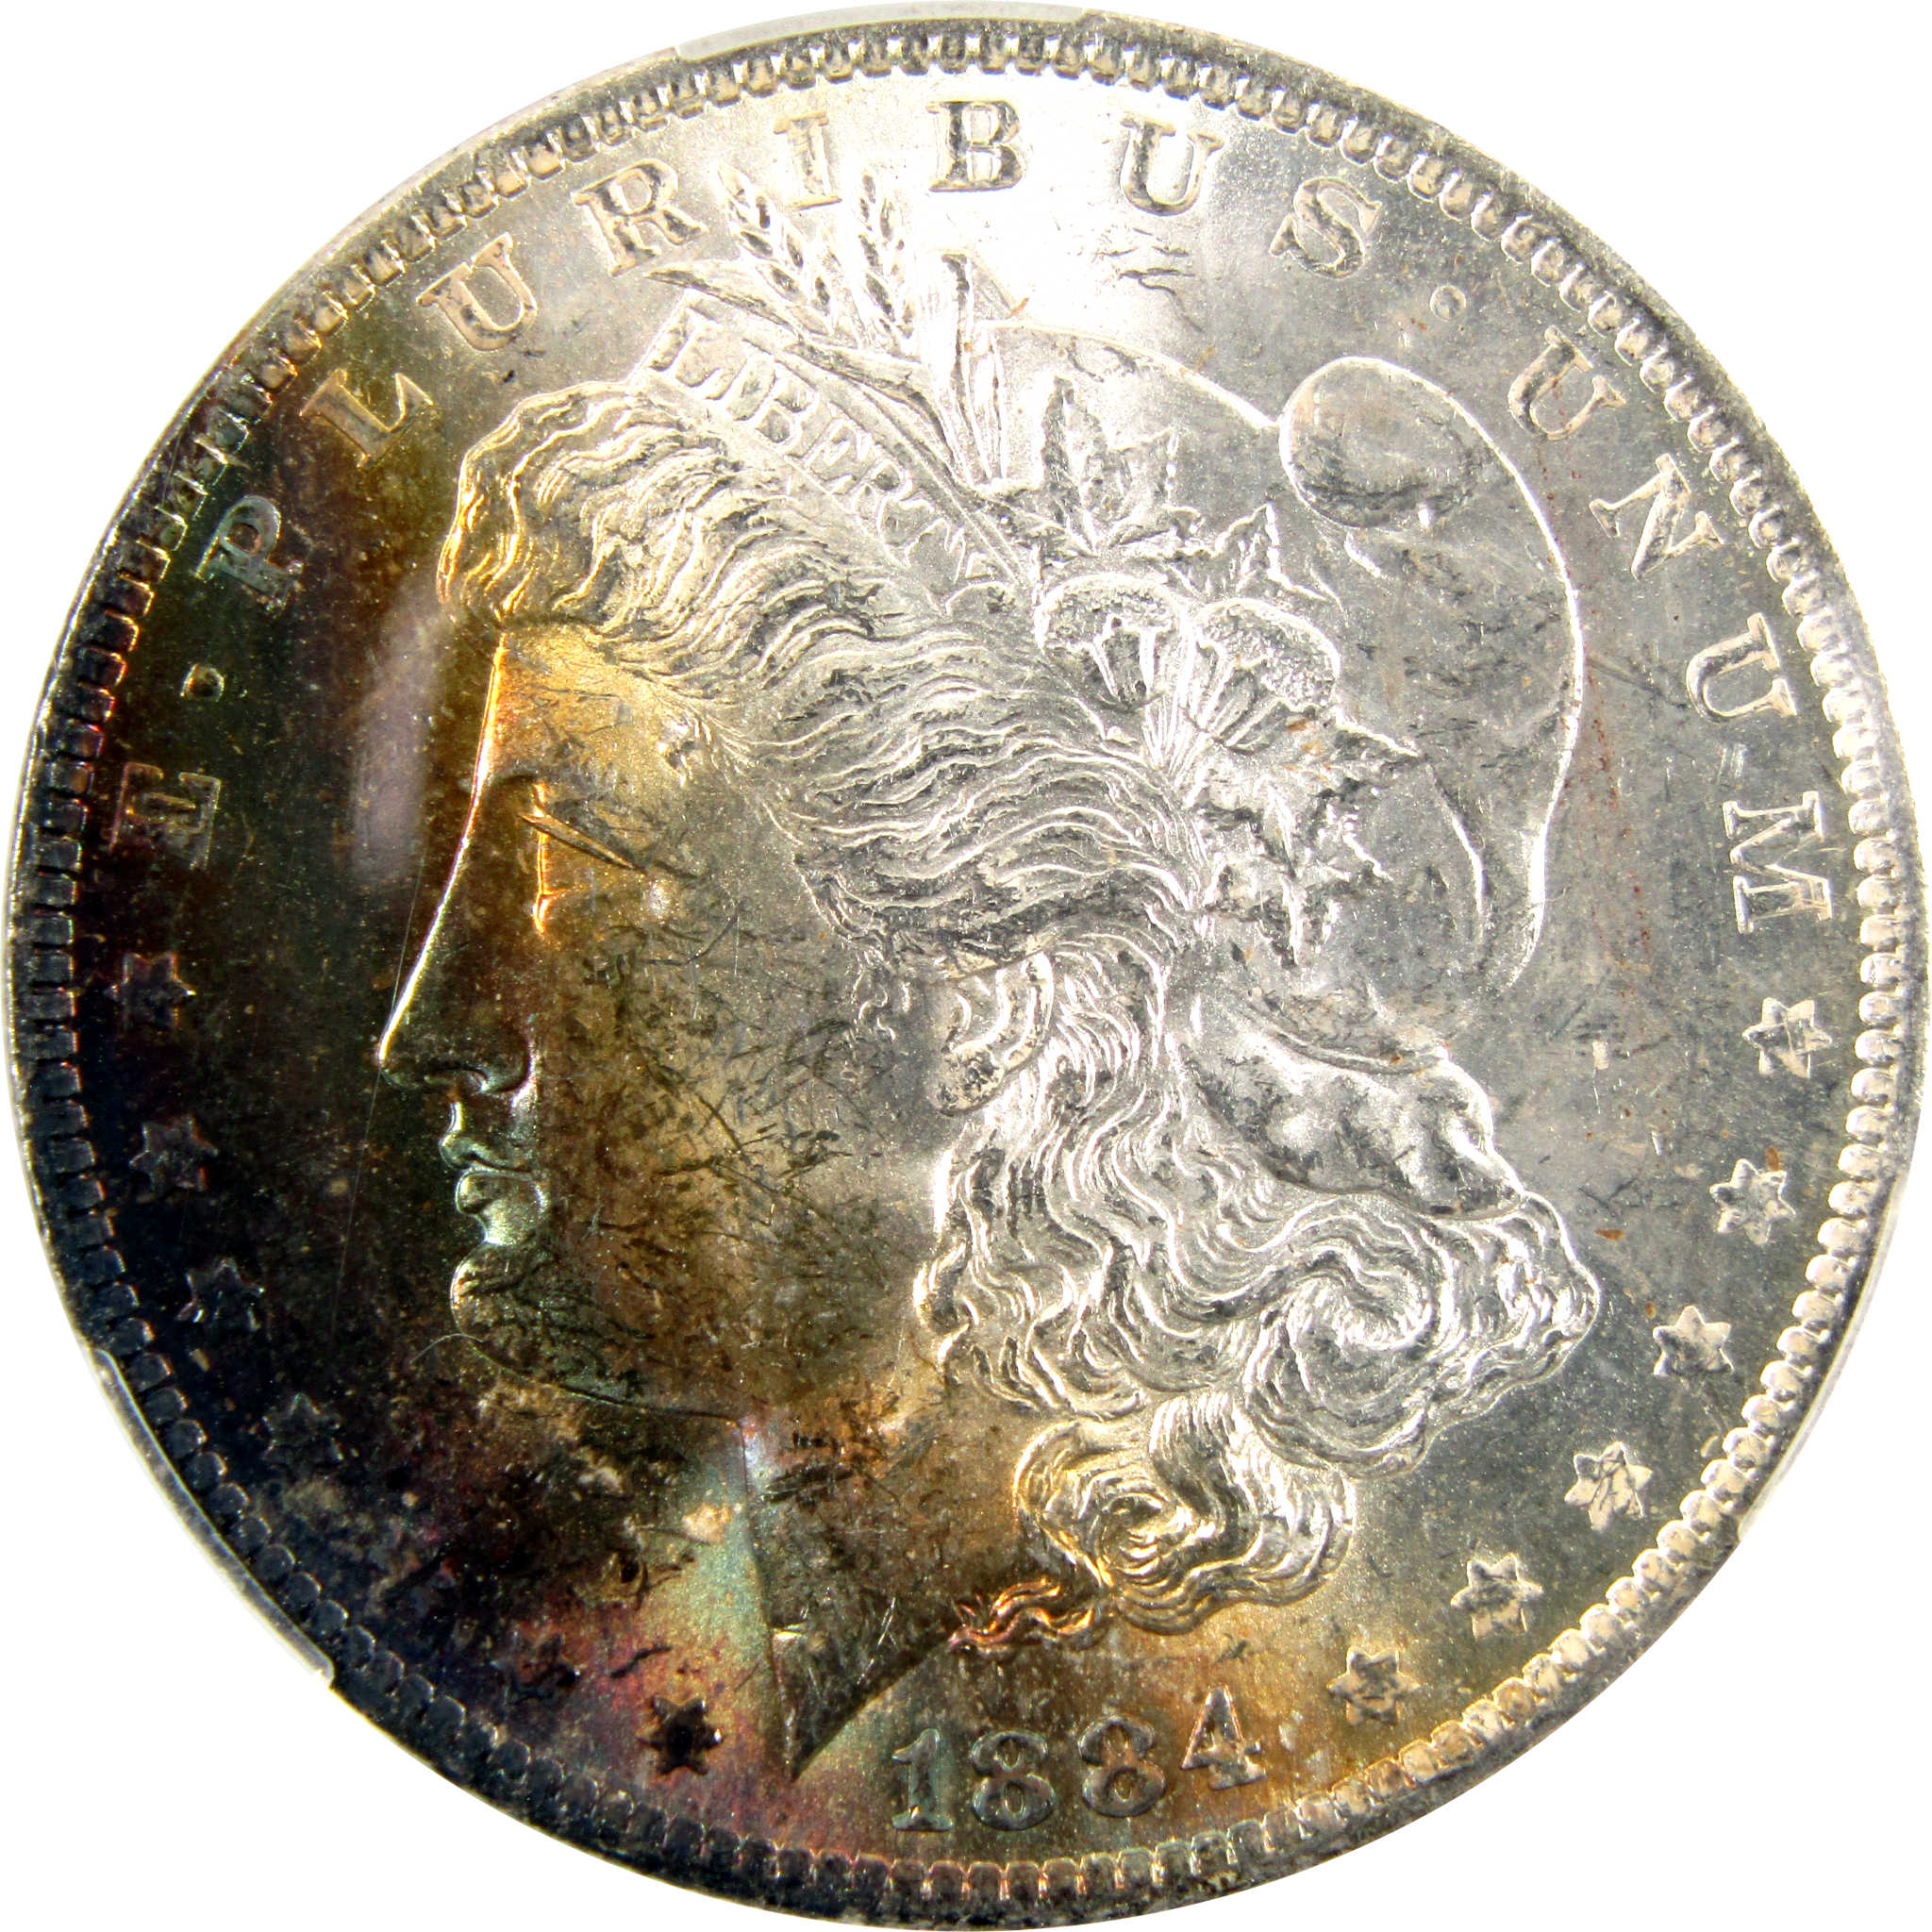 1884 O Morgan Dollar MS 62 CAC 90% Silver $1 Unc Toned SKU:I10491